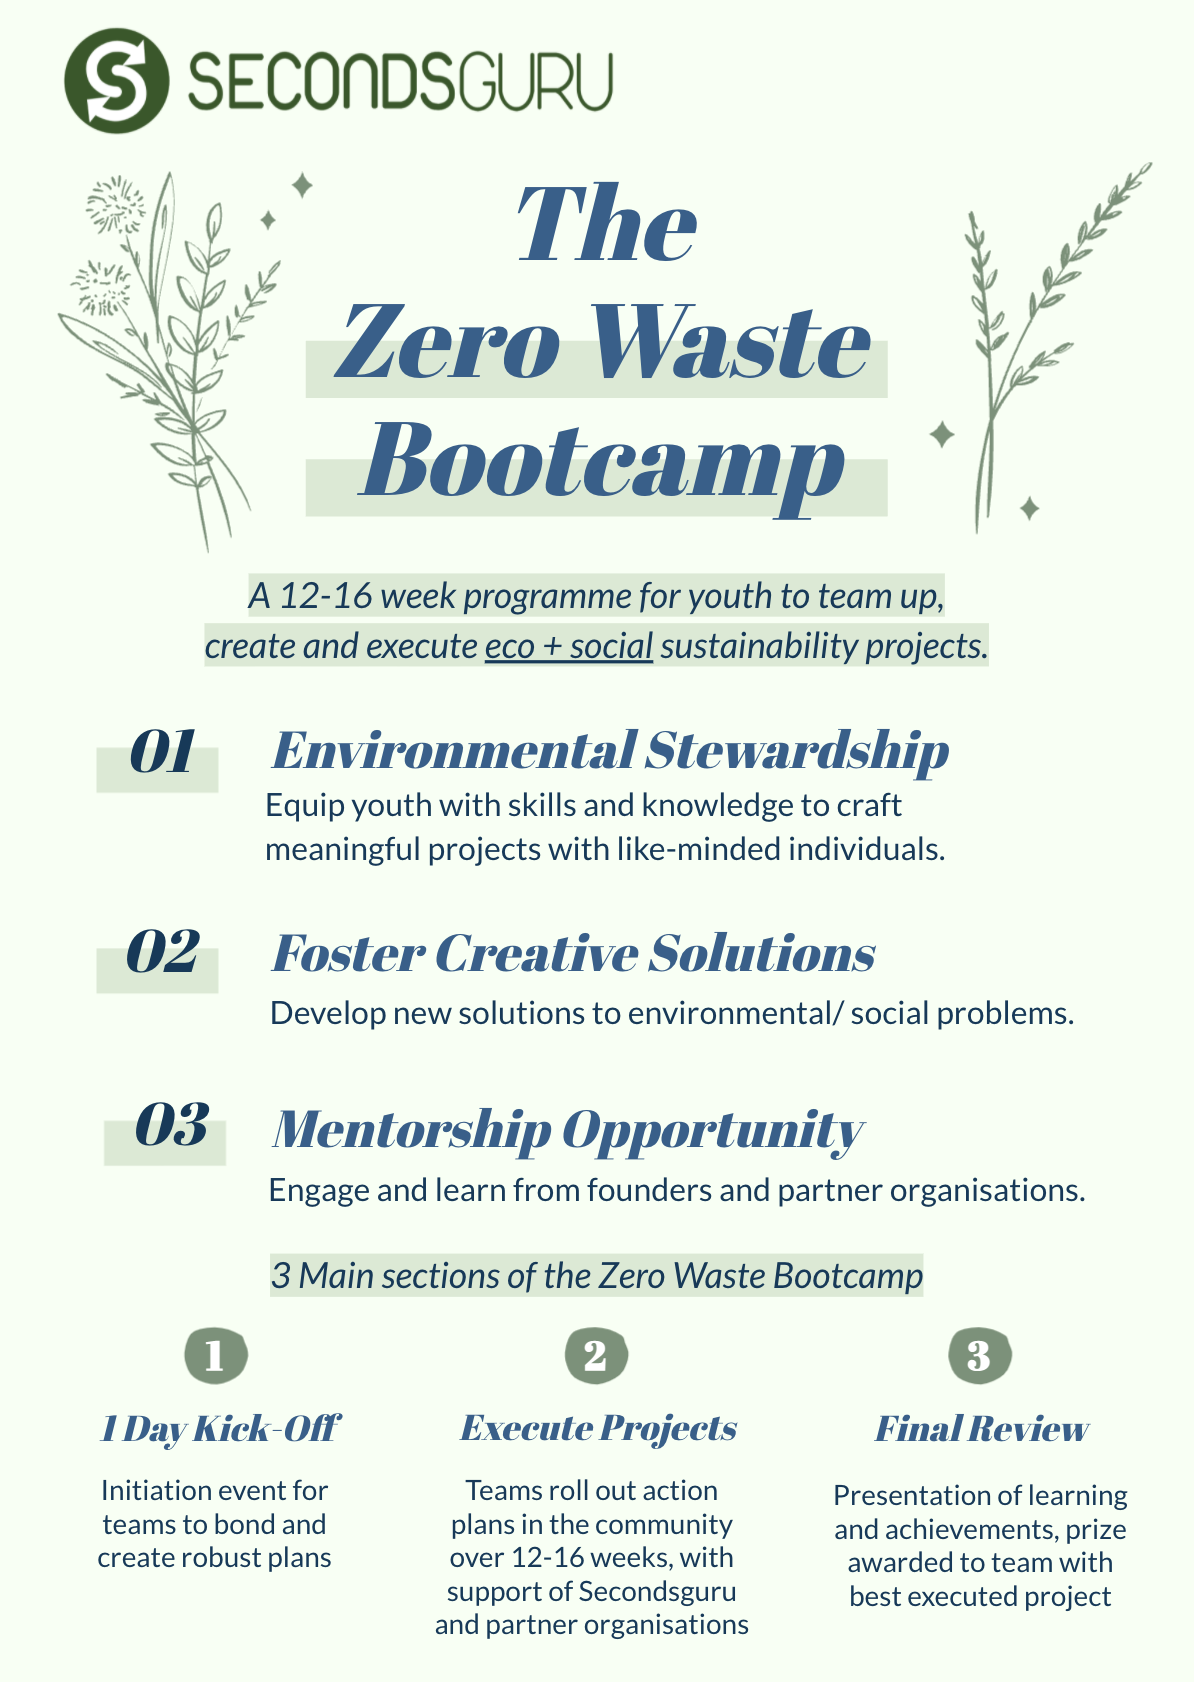 Zero Waste Bootcamp - Secondsguru